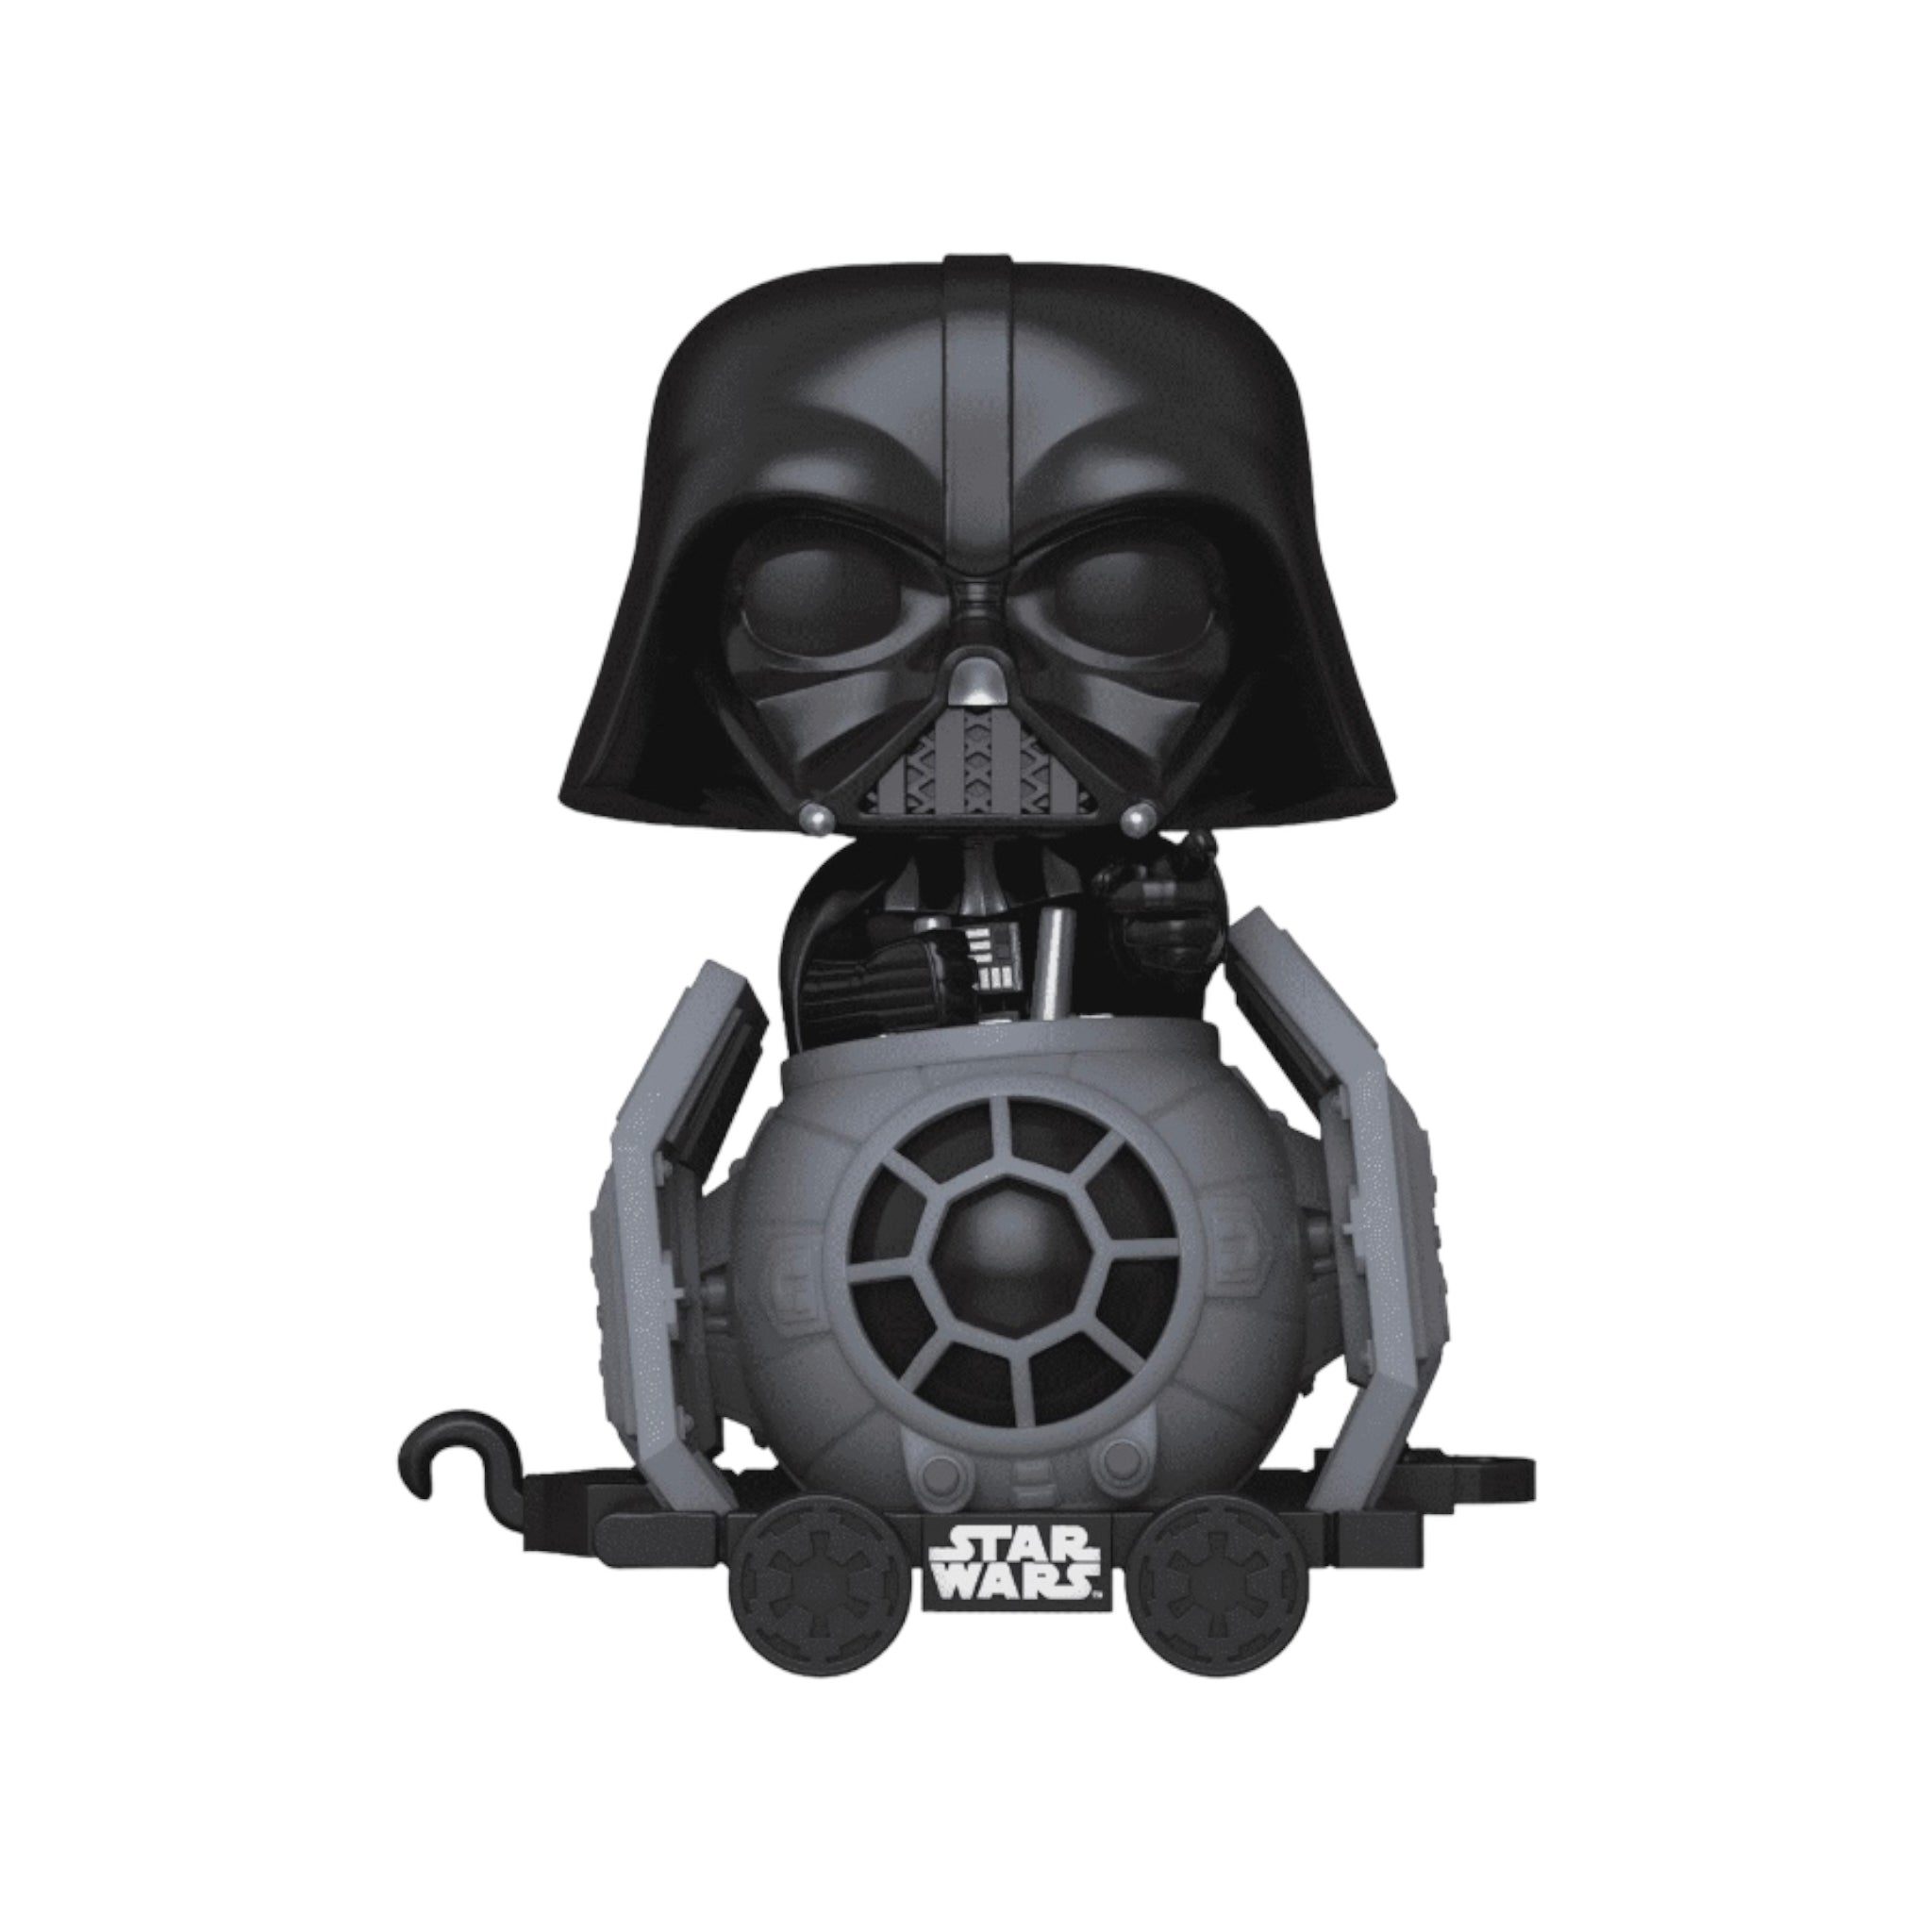 Darth Vader on Tie Fighter #20 Funko Pop! - Star Wars - Amazon Exclusive